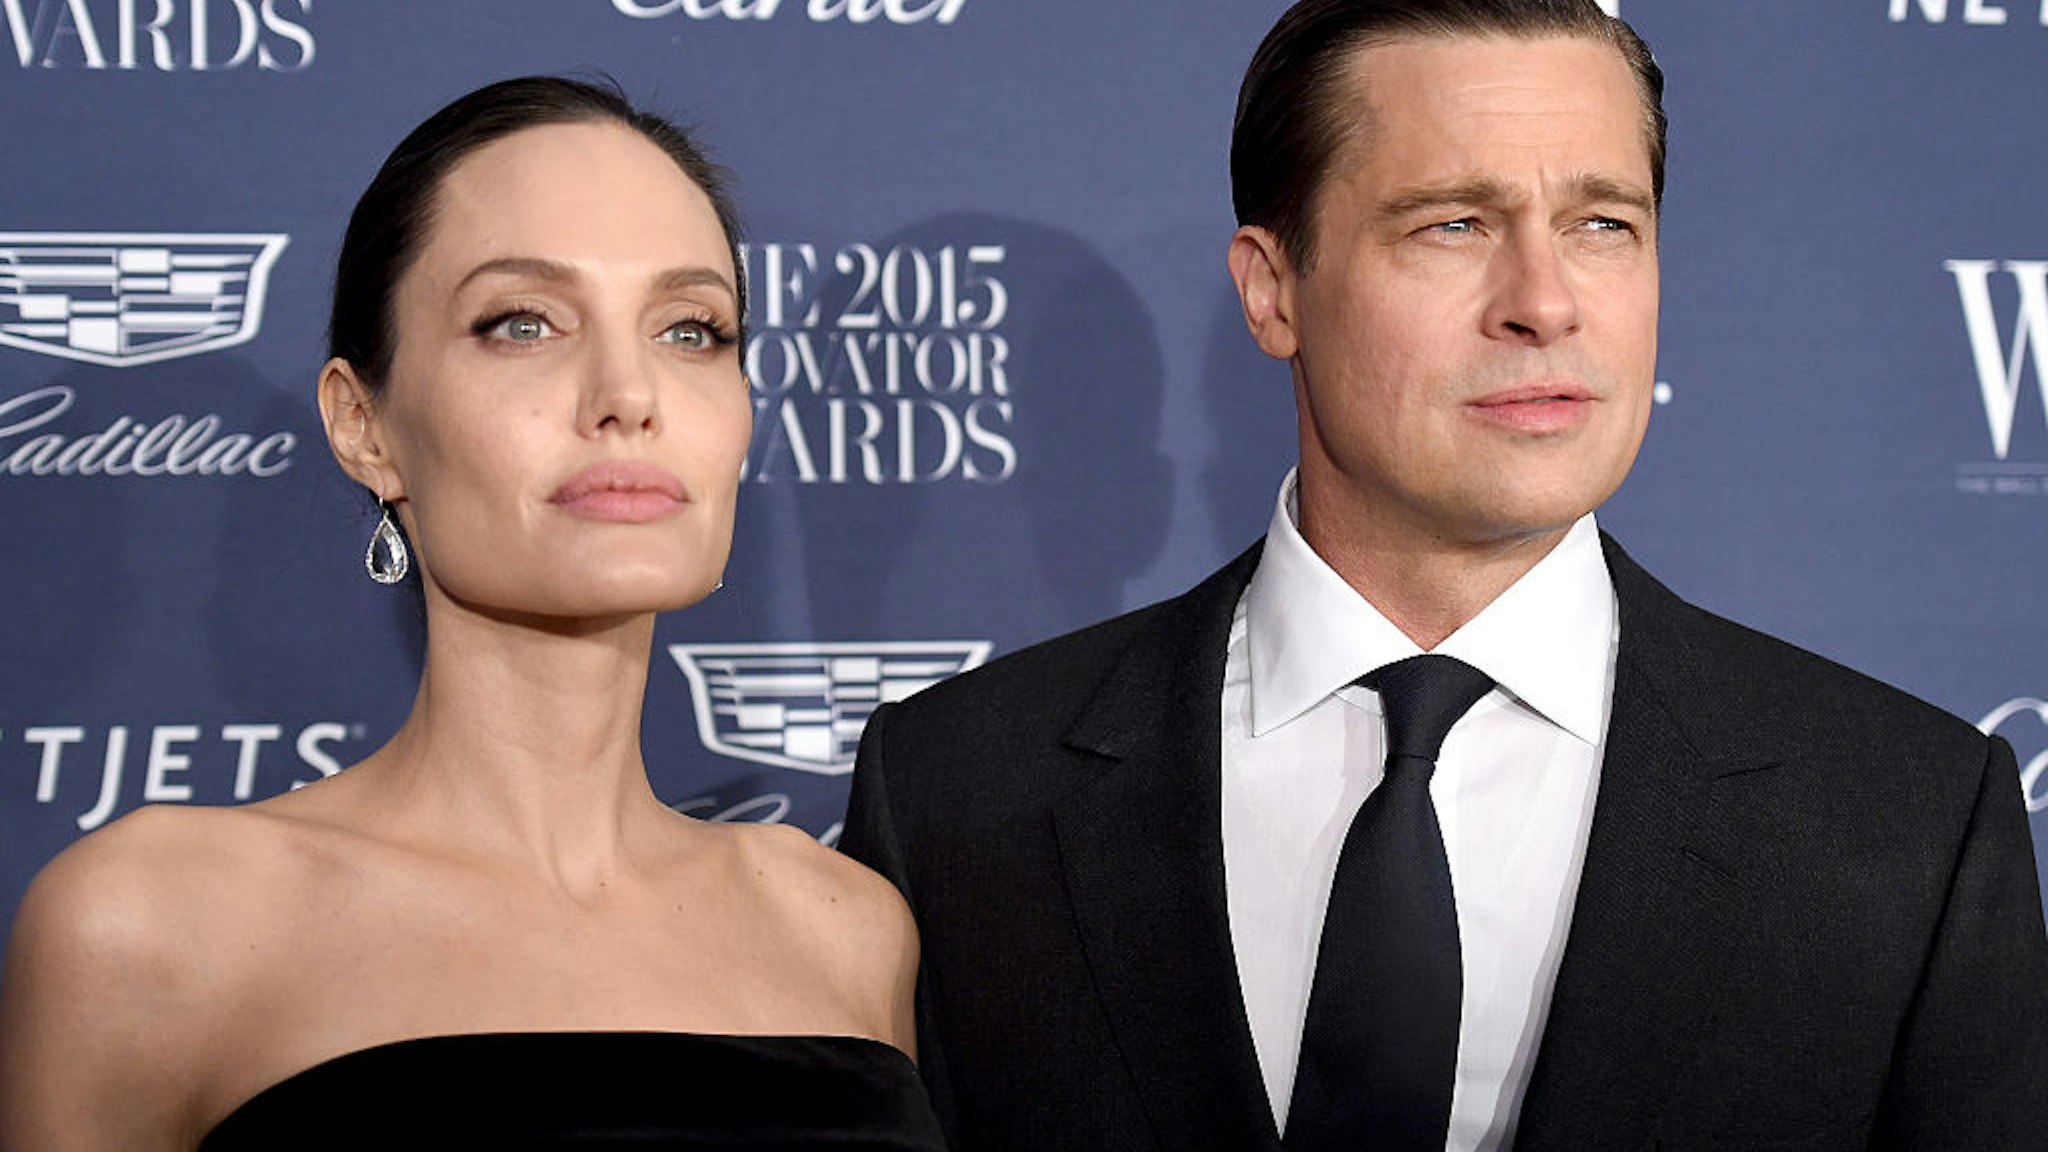 2015 Entertainment Innovator Angelina Jolie Pitt (L) and Brad Pitt attend the WSJ. Magazine 2015 Innovator Awards at the Museum of Modern Art on November 4, 2015 in New York City.